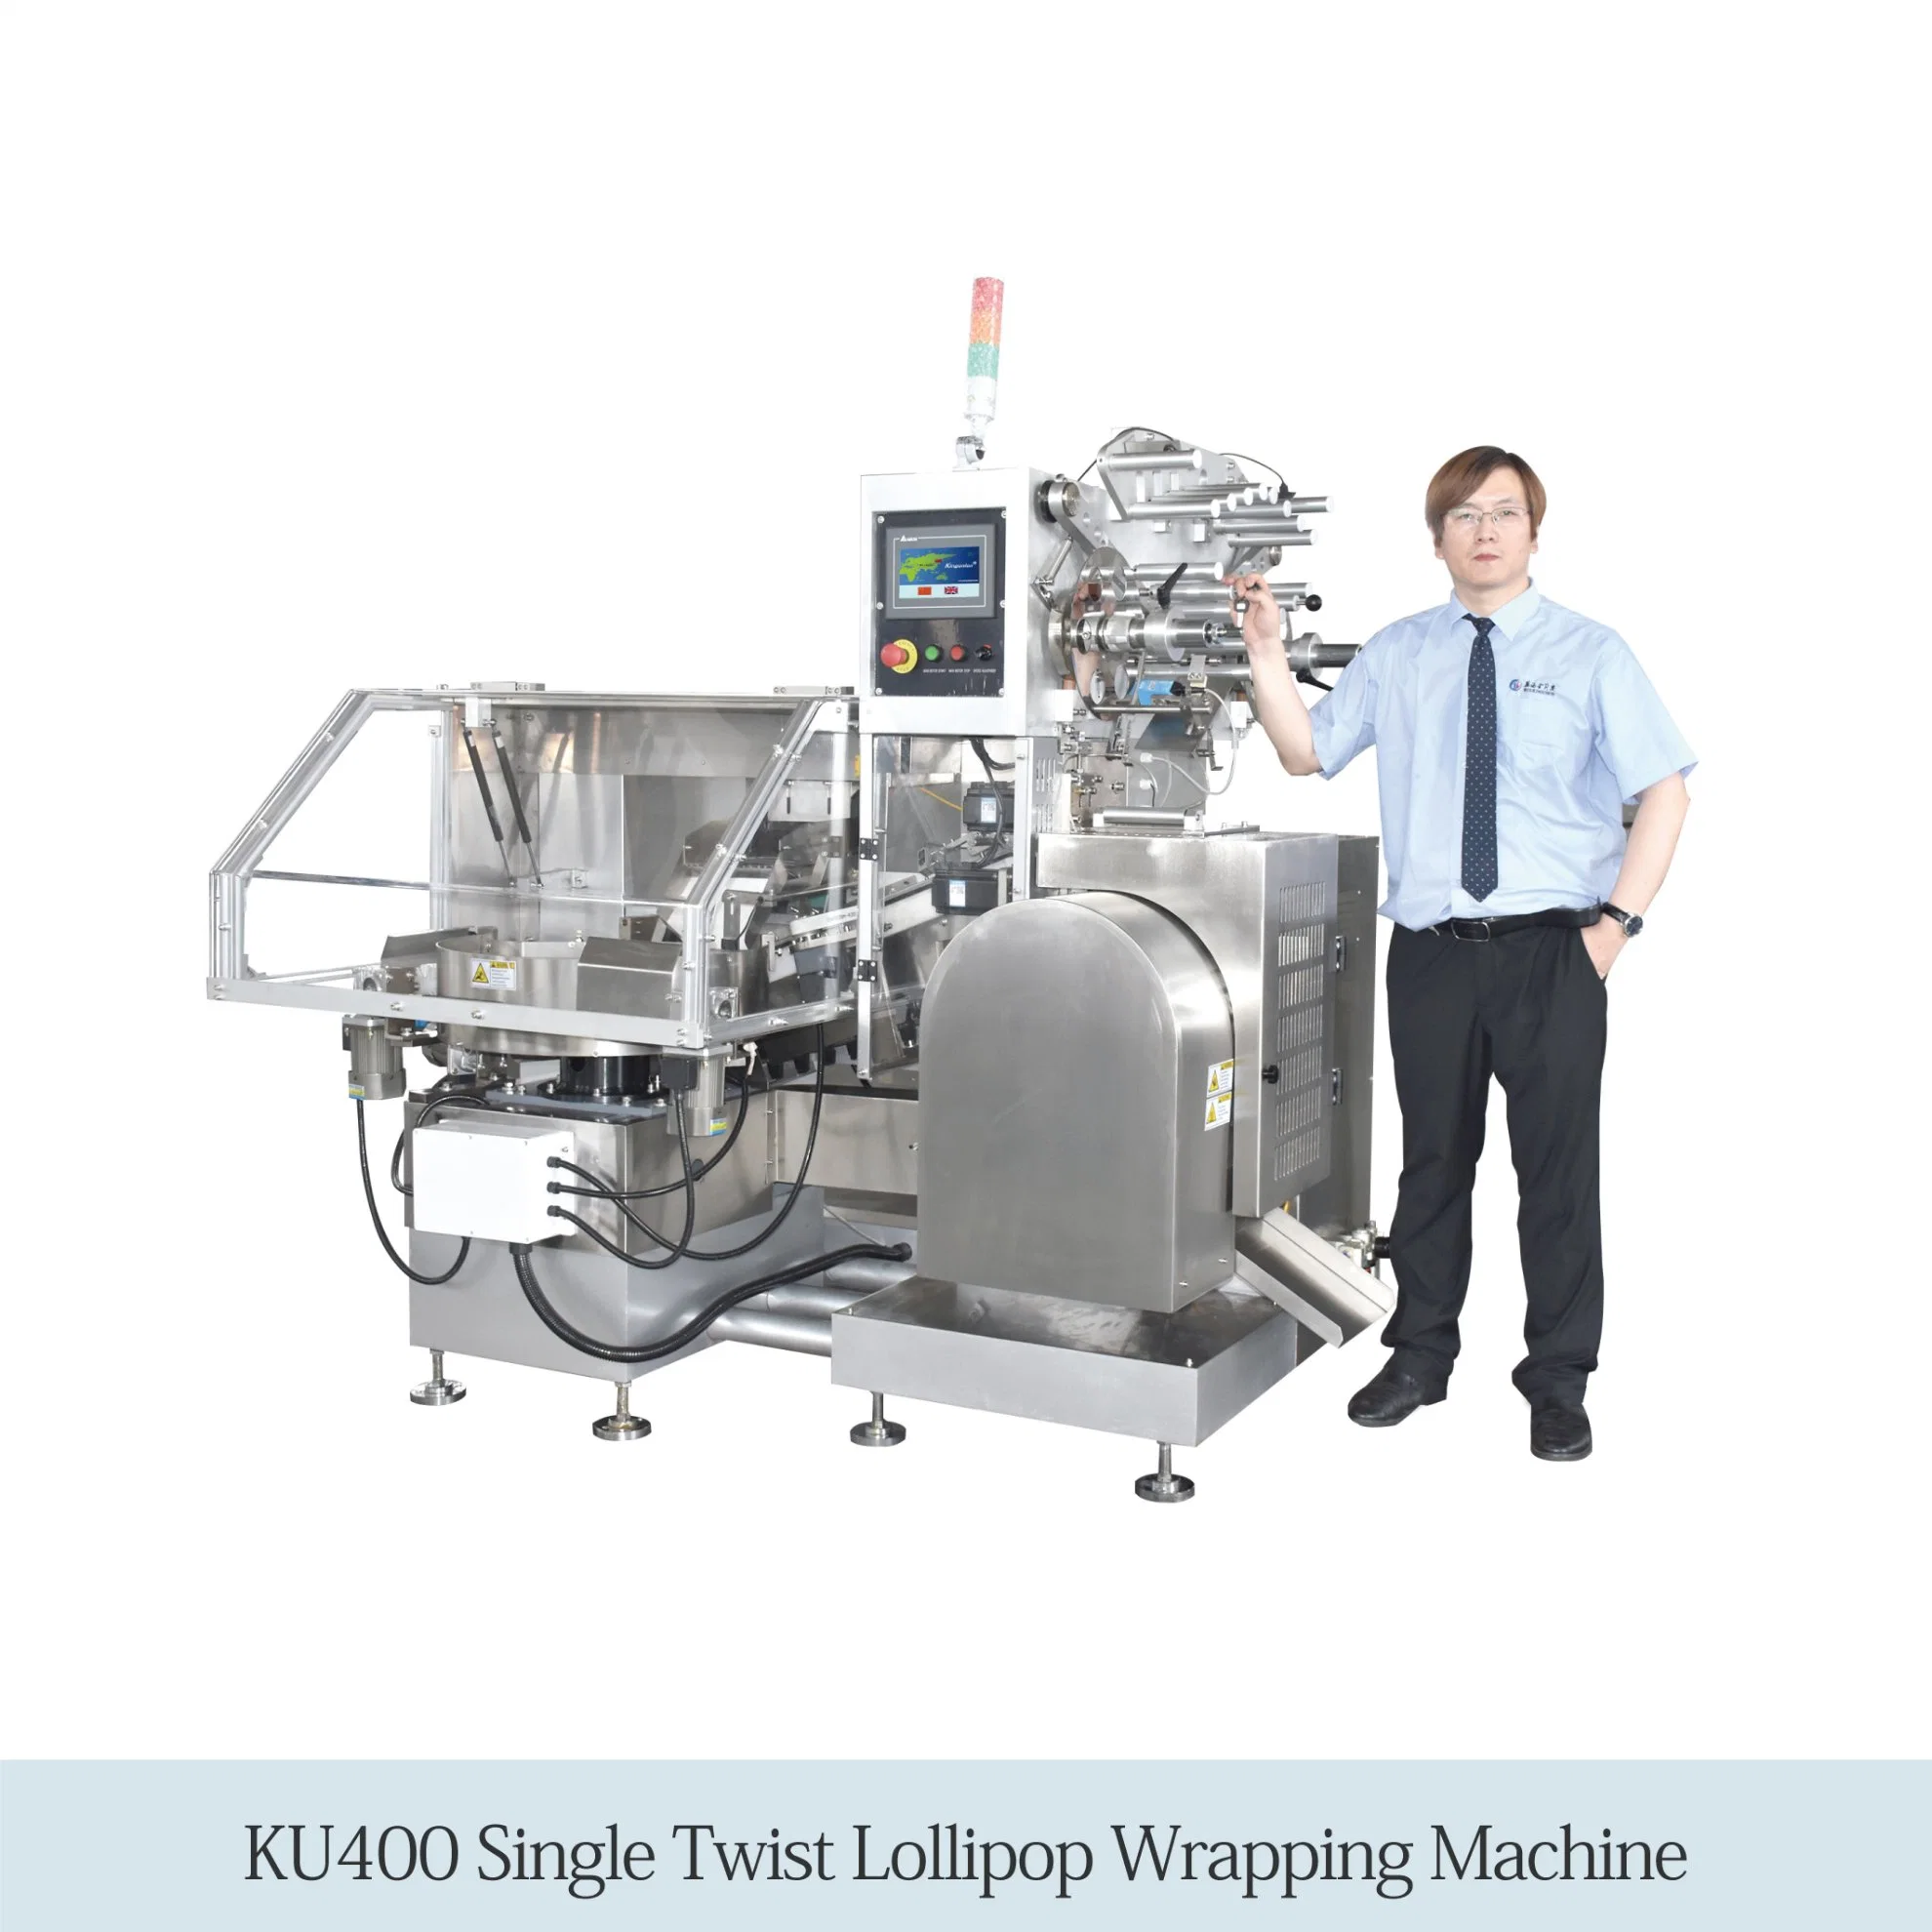 Single Twist Lollipop Wrapping Machine (KU400)